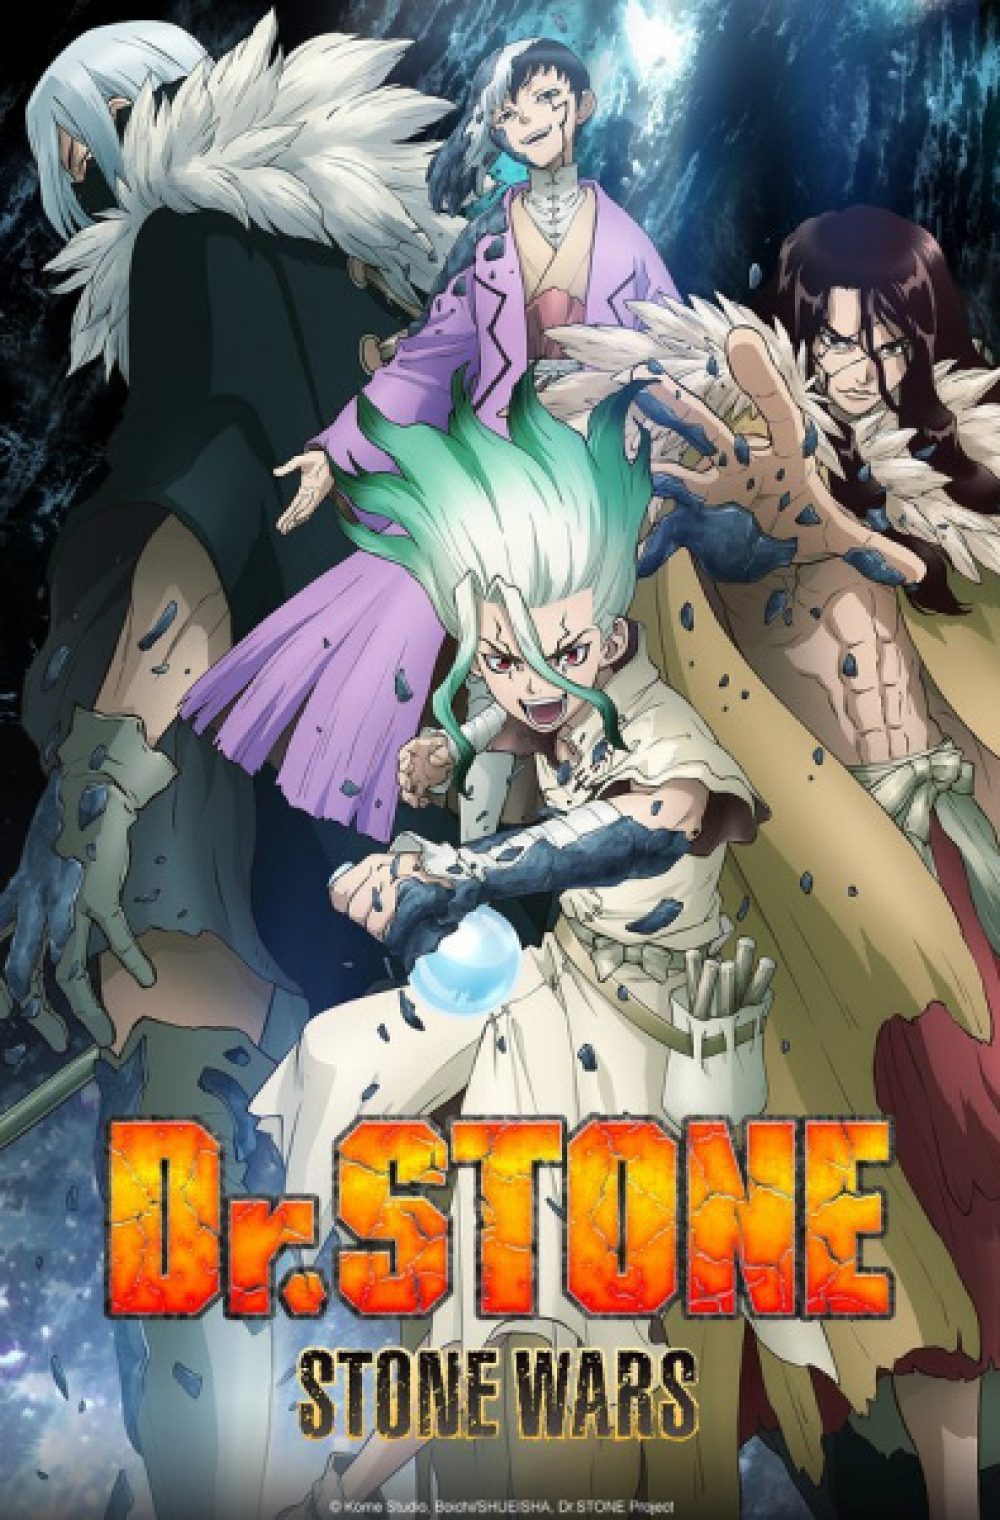 Dr. Stone Season 2: Stone Wars